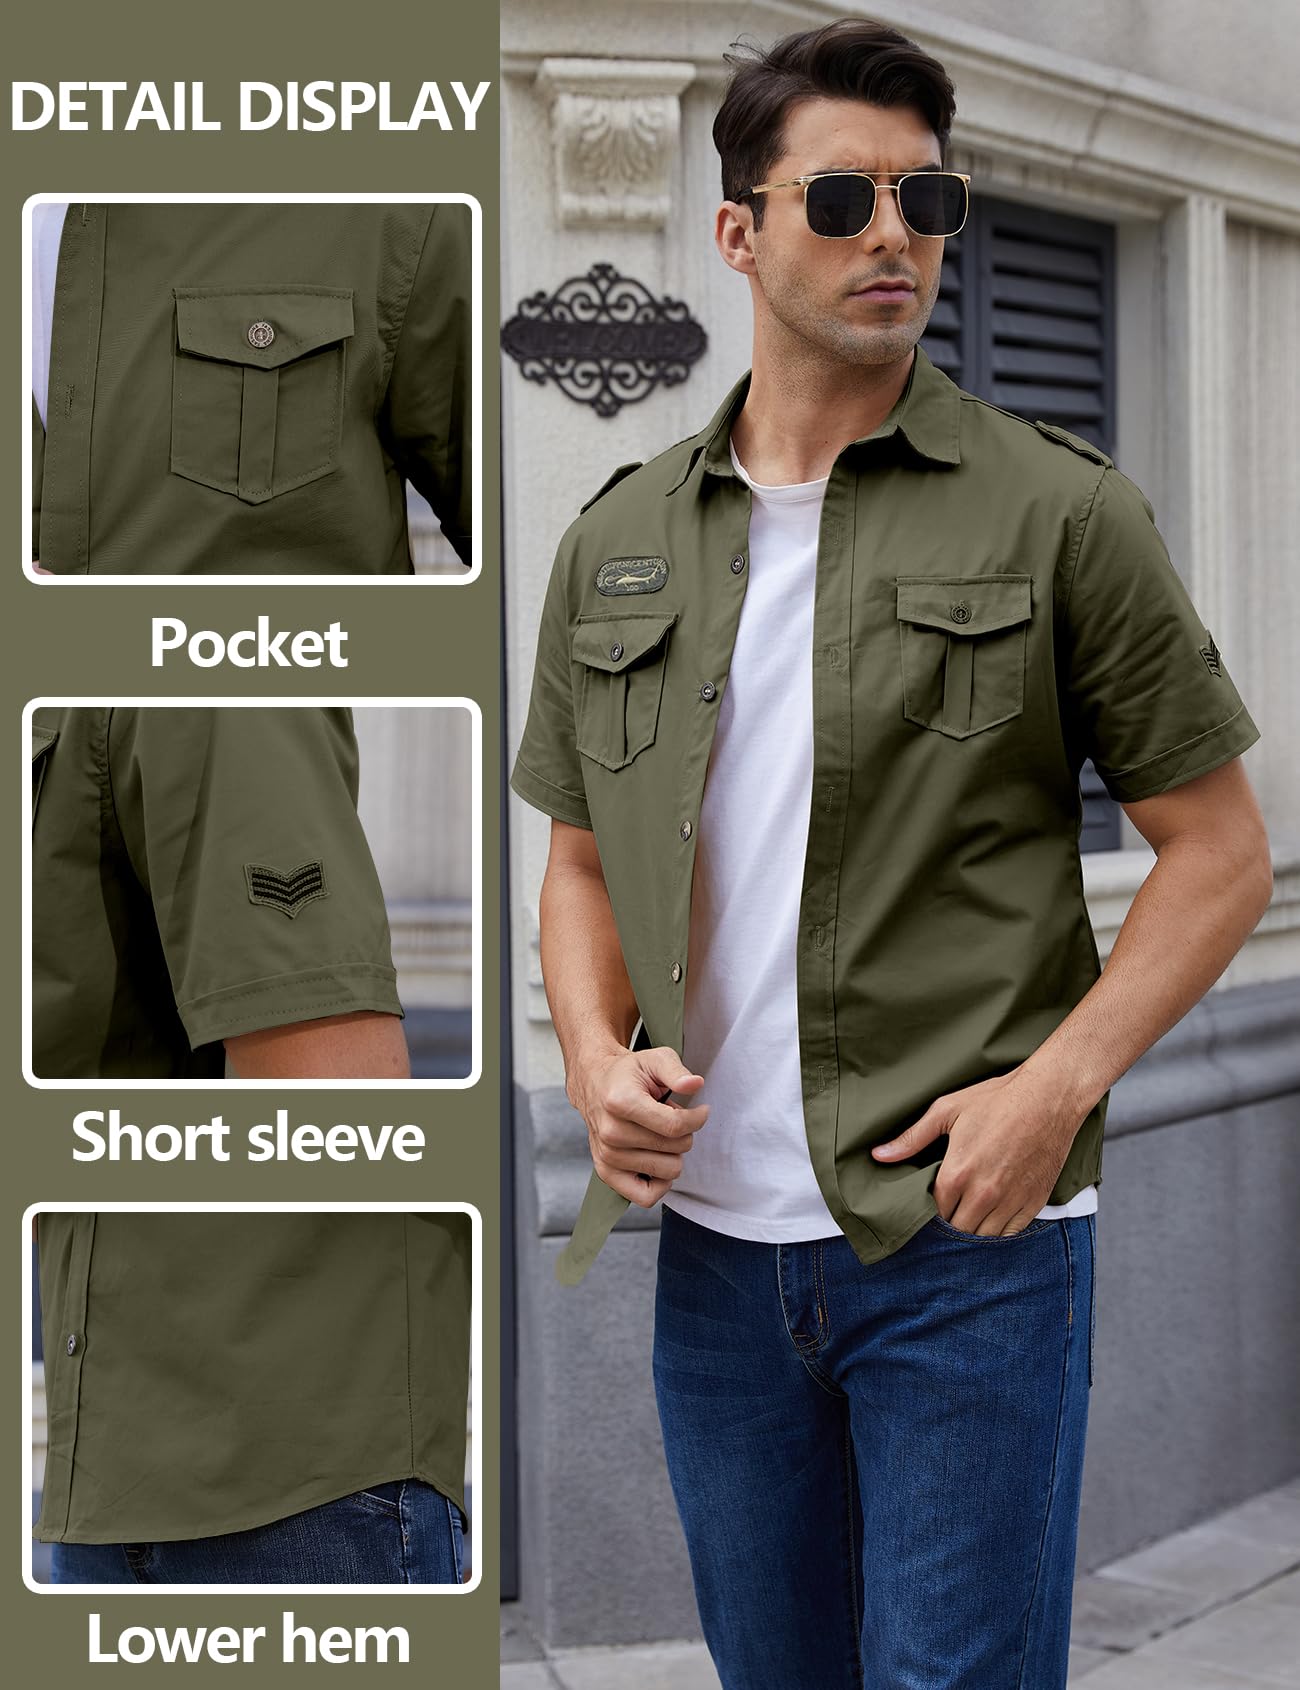 Gihuo Men Shirt Short Sleeve Military Button Down Army Tactical Shirt Utility Cargo Work Uniform Shirt Tops (Medium, Army Green)